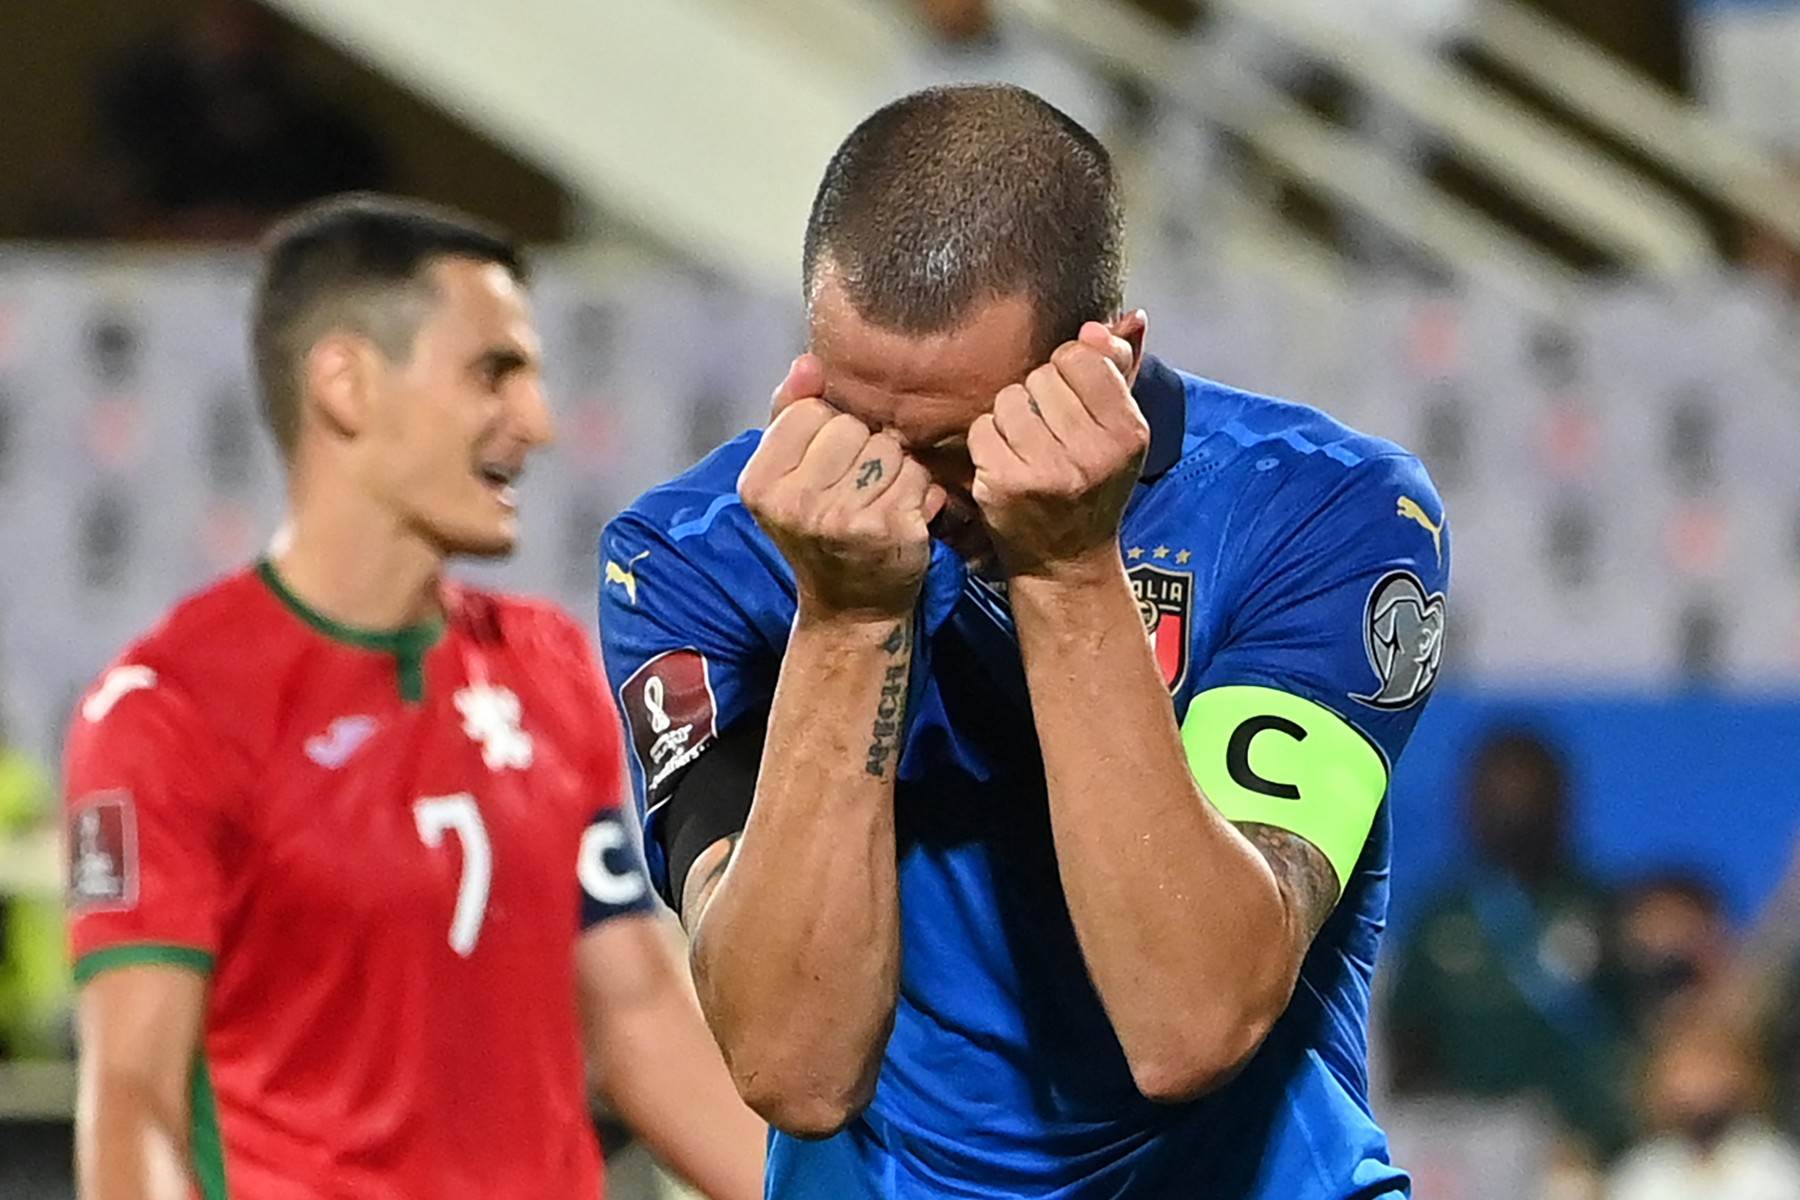  Italija - Bugarska 1:1, kvalifikacije za SP 